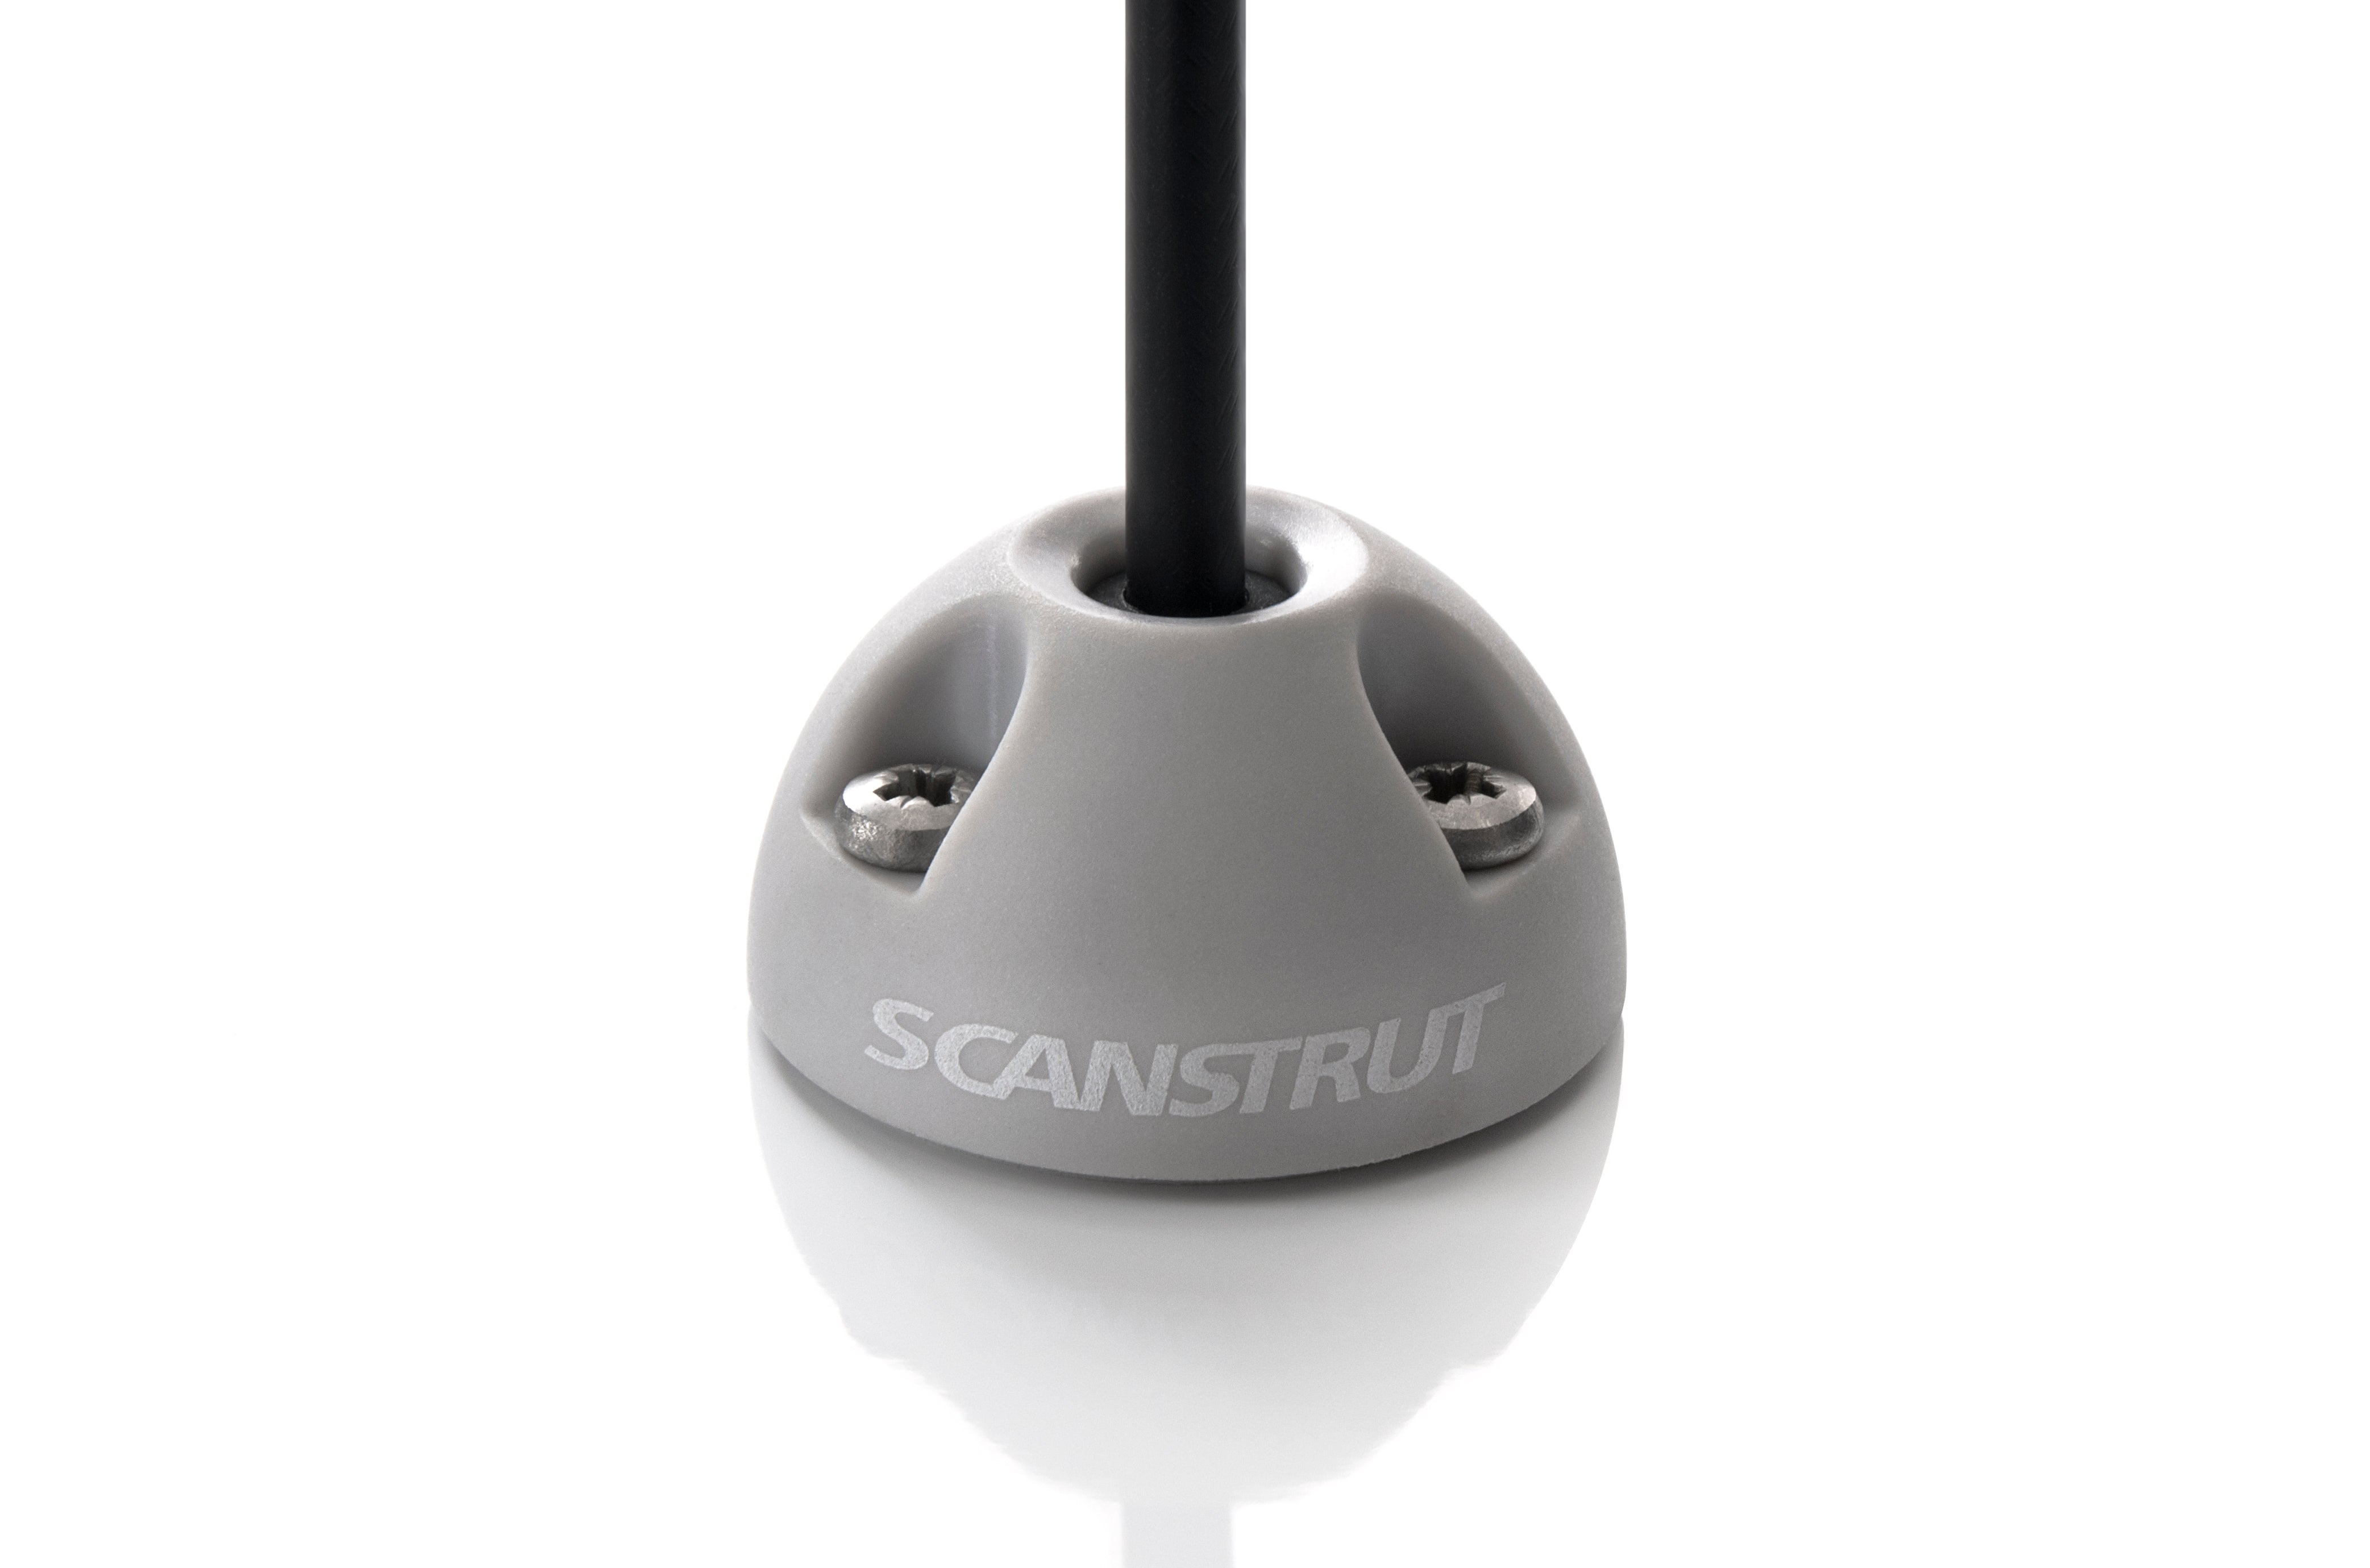 Sello de cable Scanstrut Micro para tamaños de cable de 2 a 6 mm - spo-cs-disabled - spo-default - spo-disabled - spo-notify-me-disable